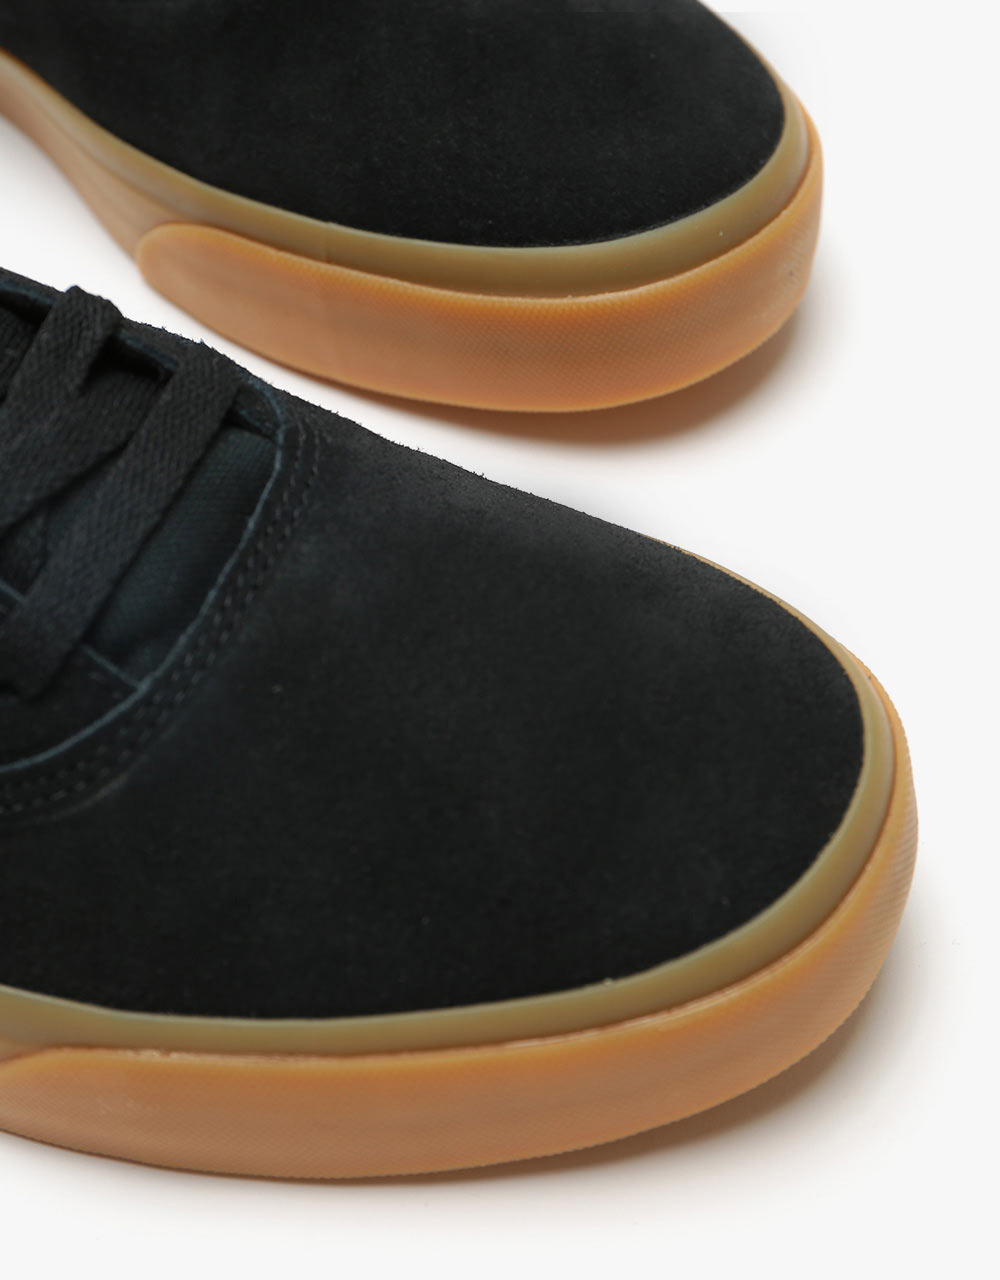 Nike SB Charge Suede Skate Shoes - Black/Anthracite-Black-Gum Light Brown